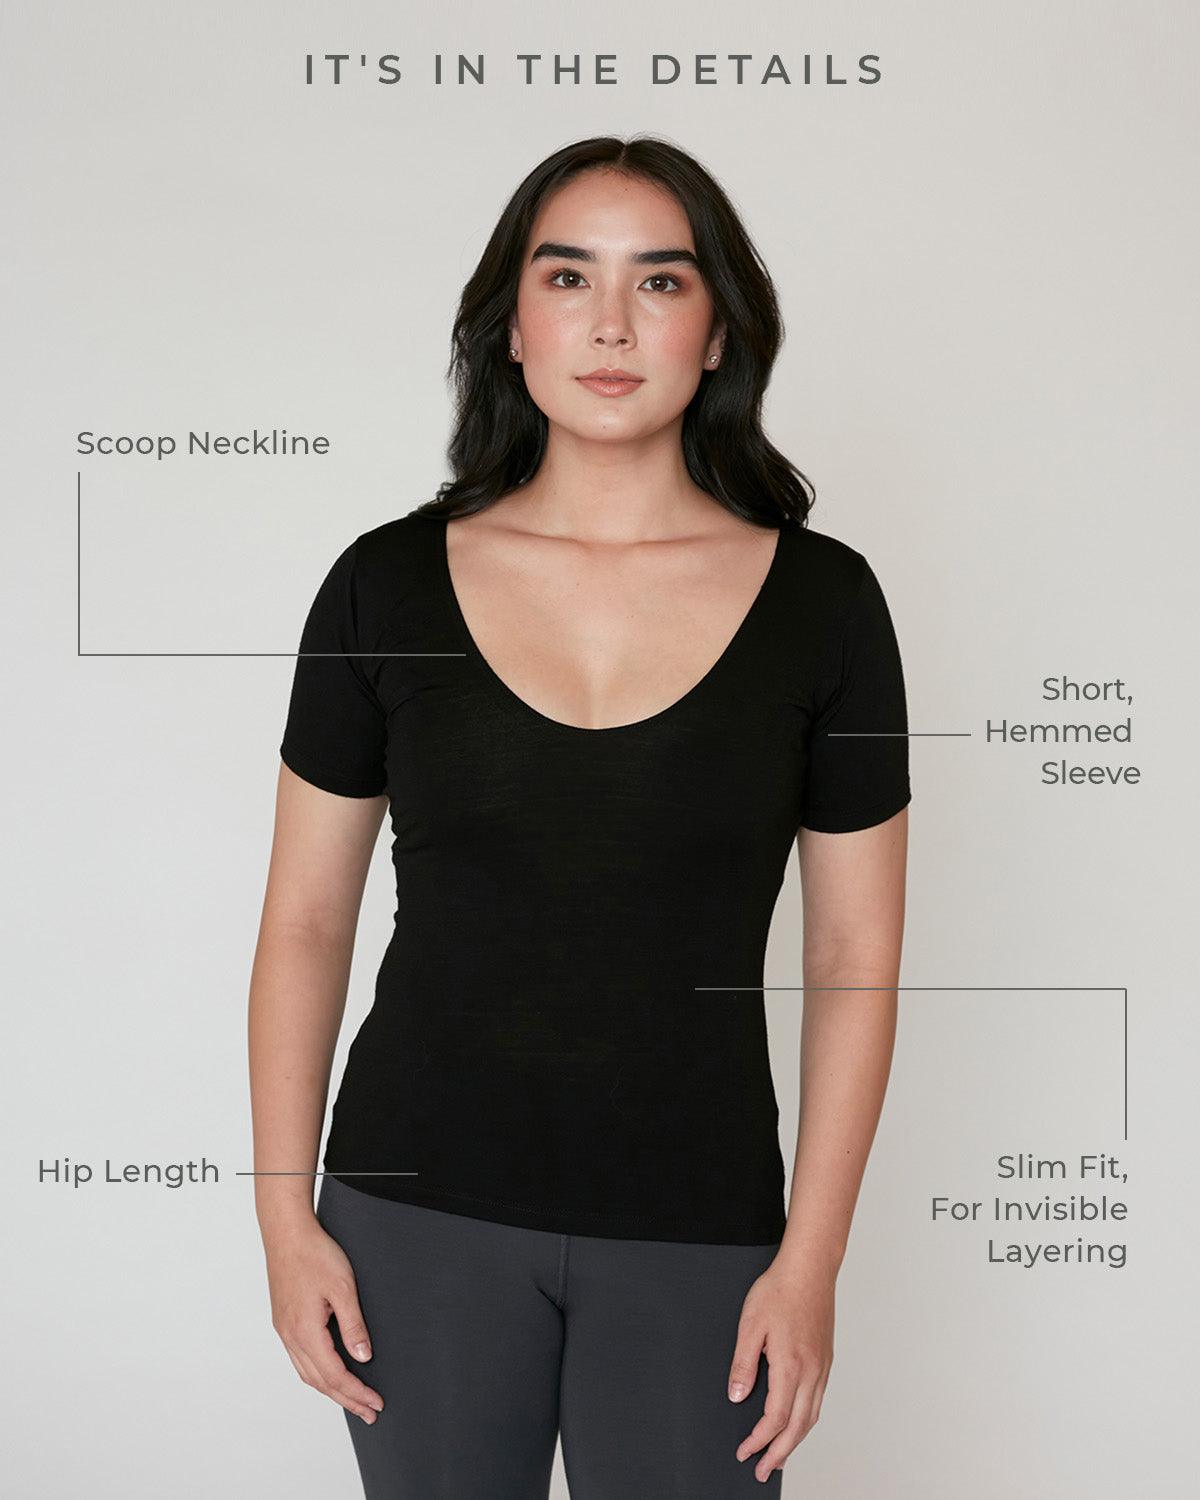 What's New - NUMI Undershirts for Women - Sweatproof Undershirts